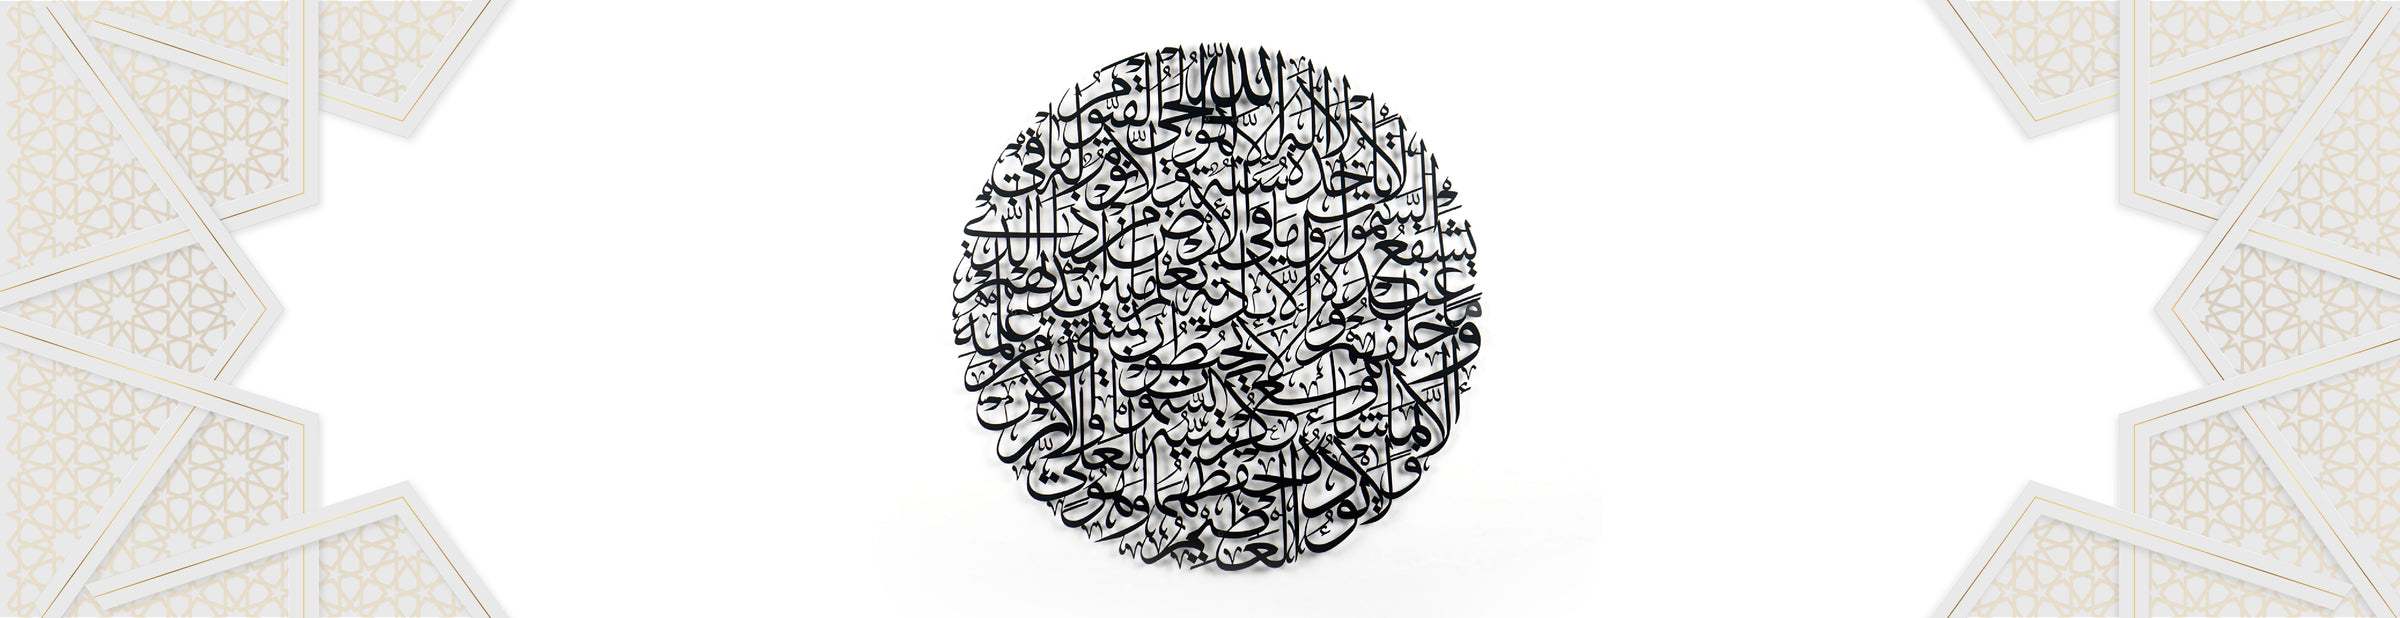 Verse & Surah Islamic Wall Art